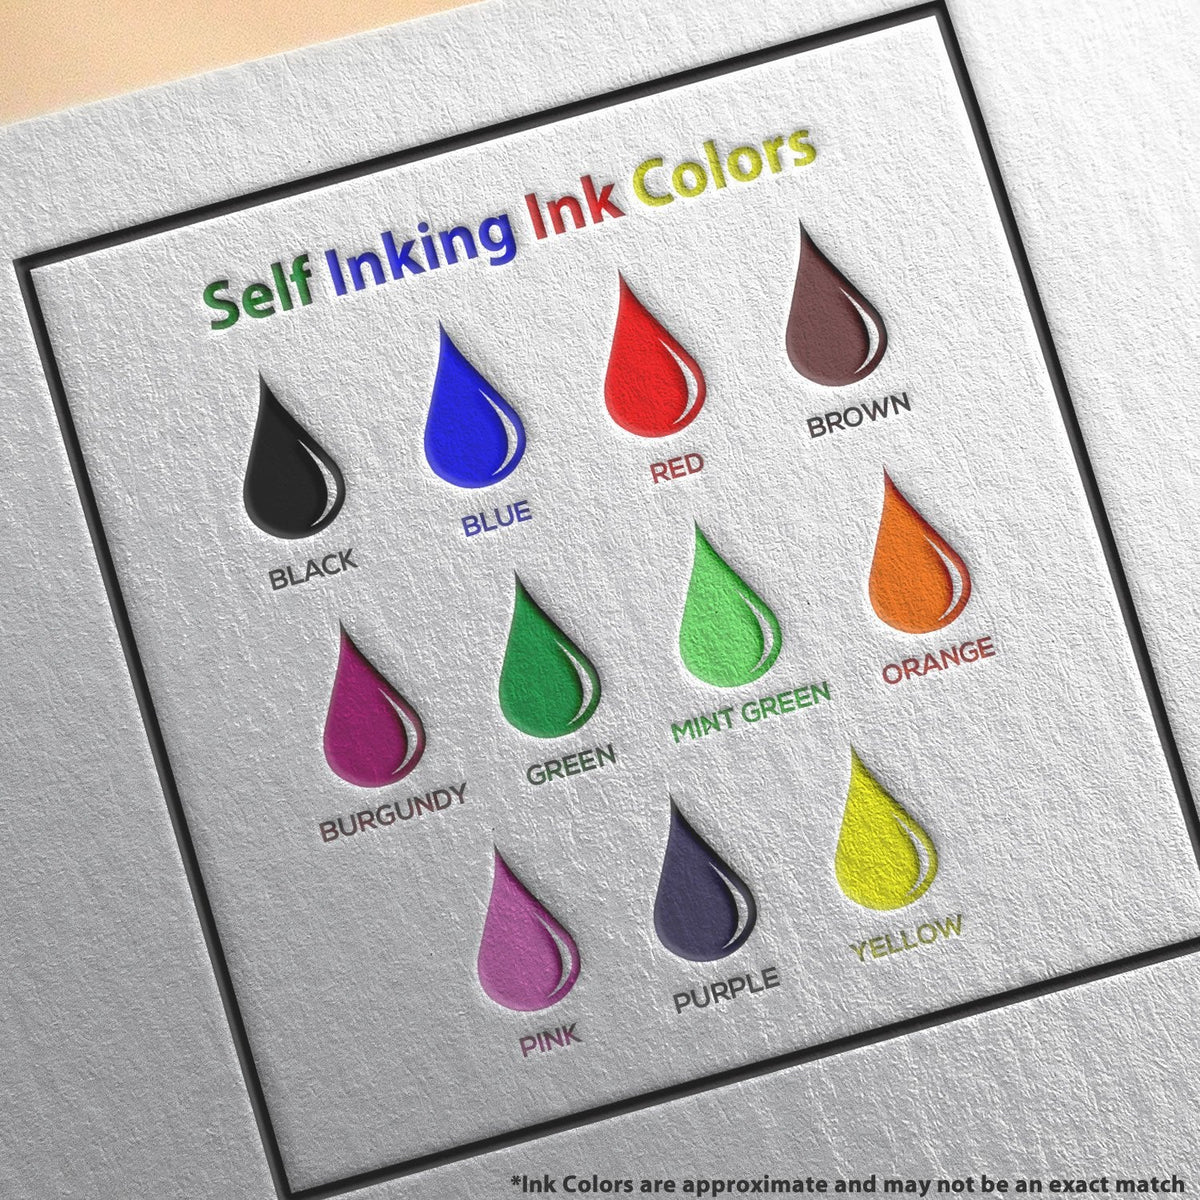 Self-Inking Round Entered Entered Stamp Ink Color Options